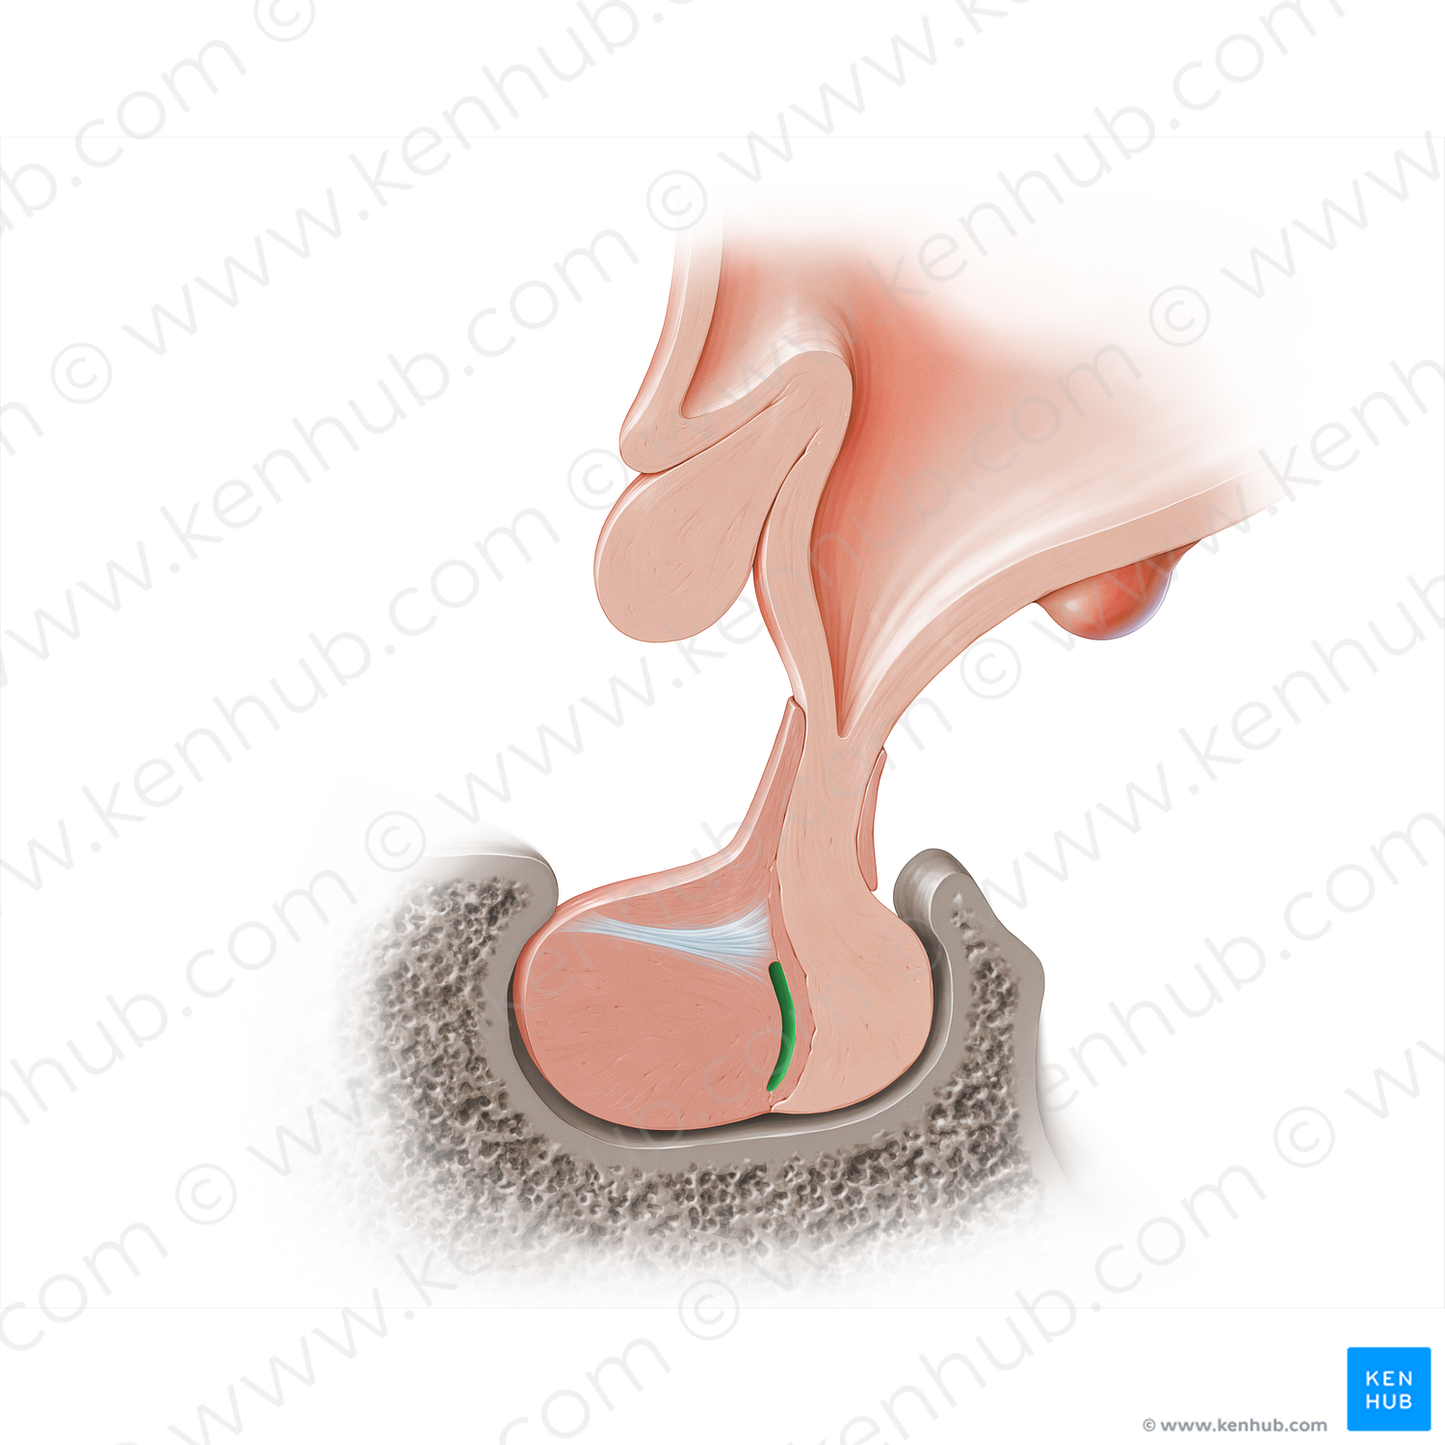 Hypophyseal cleft (#18208)